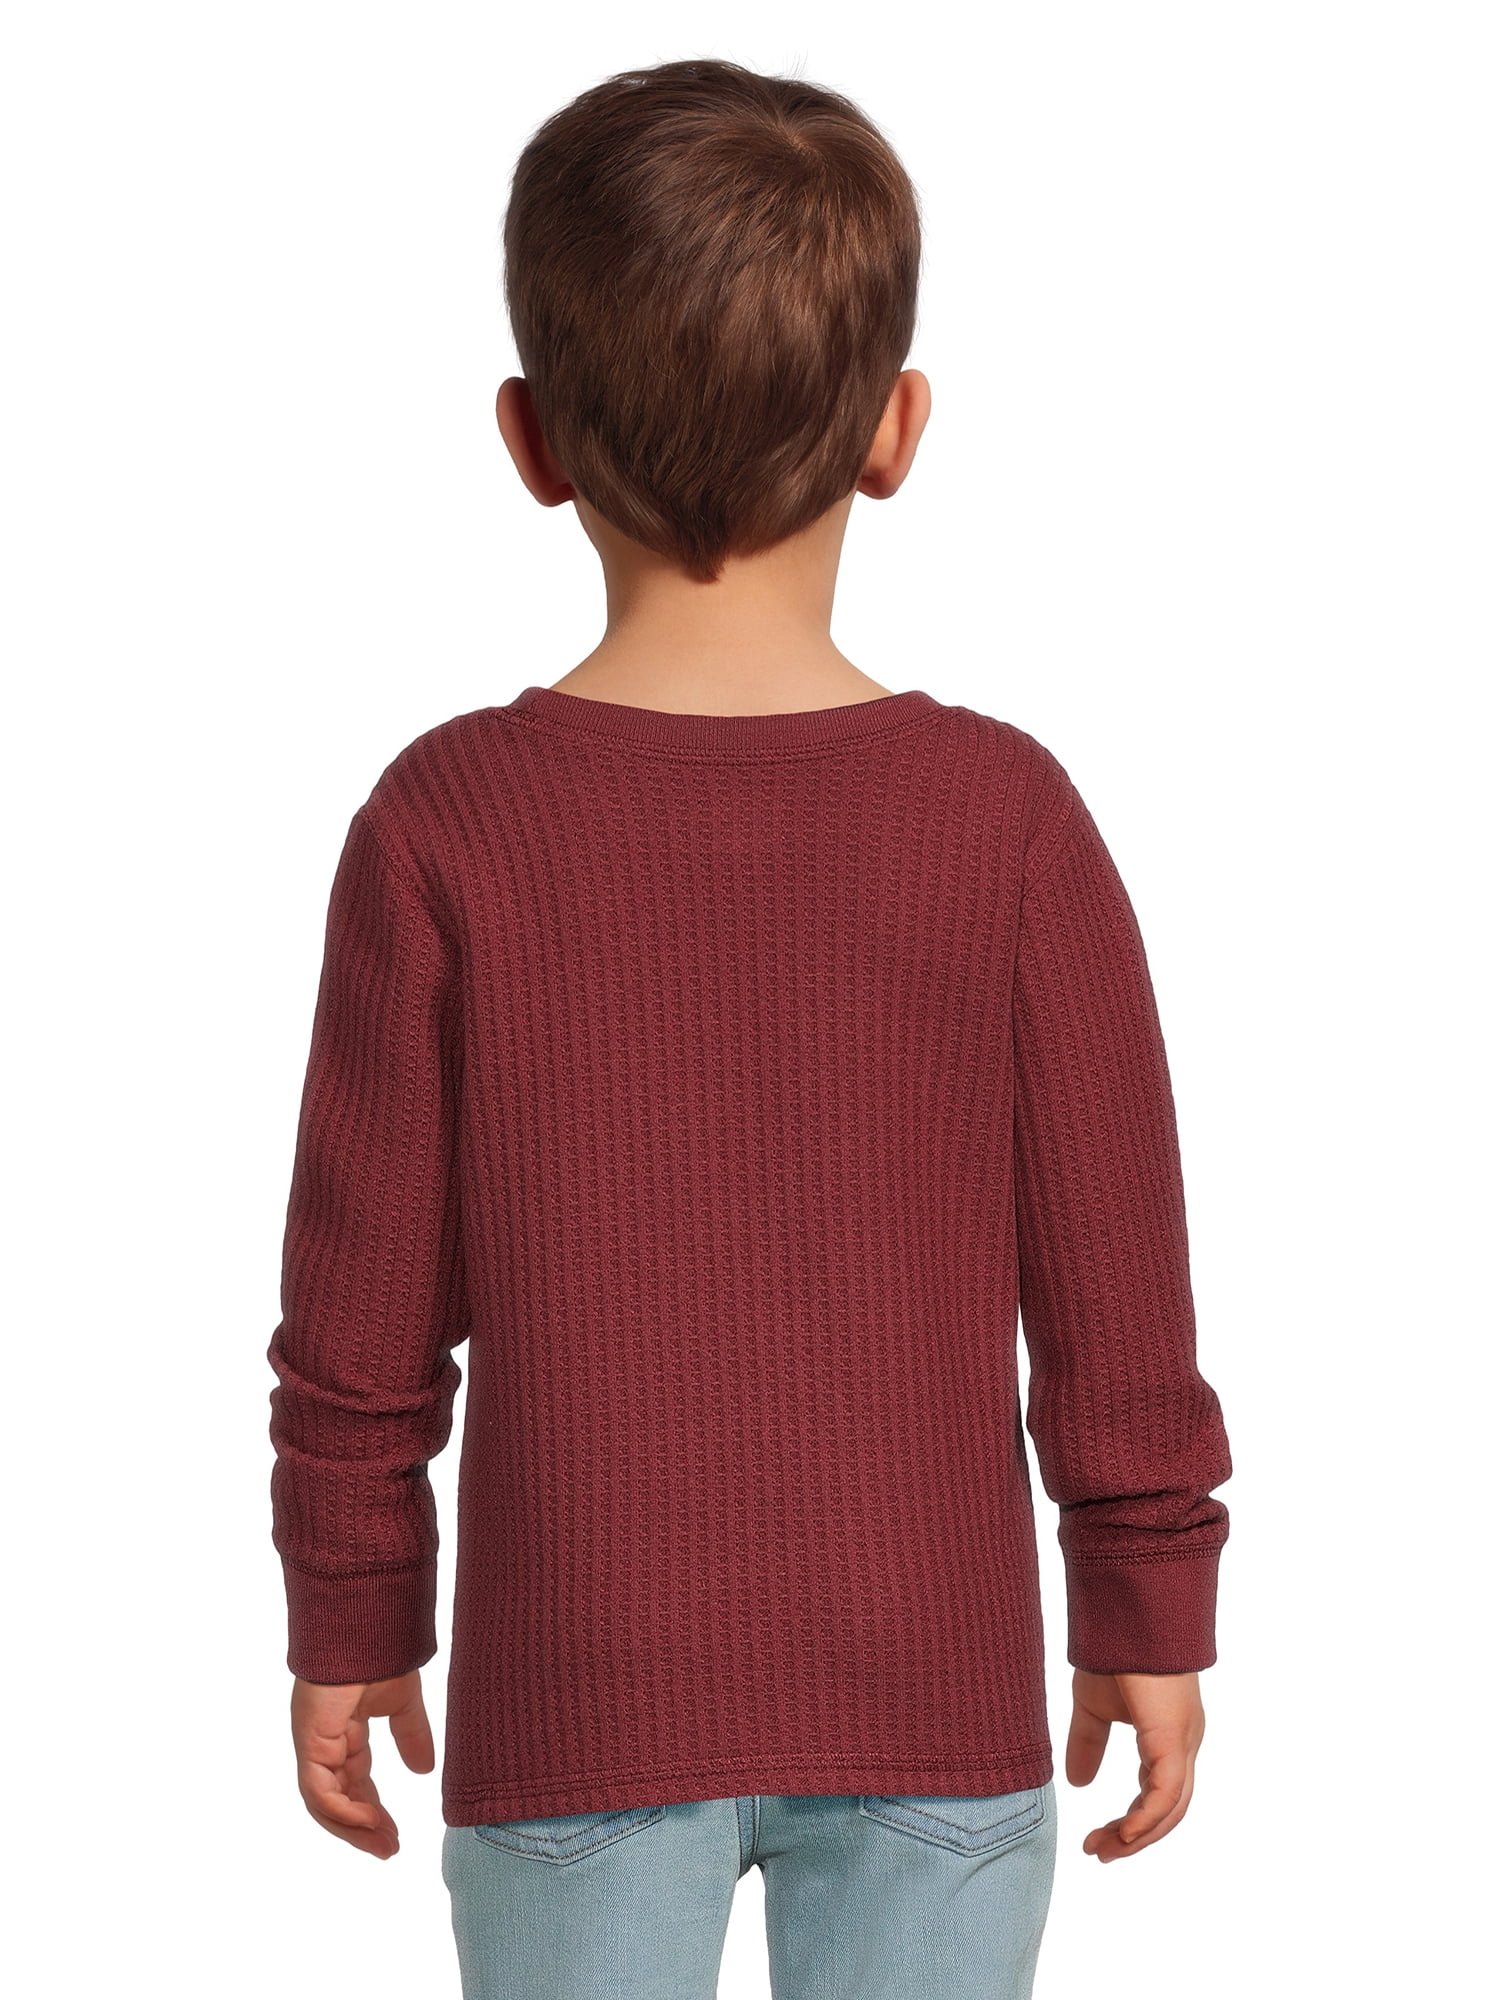 Long Garanimals Sizes Toddler Waffle Knit Boy 12M-5T T-Shirt, Sleeve